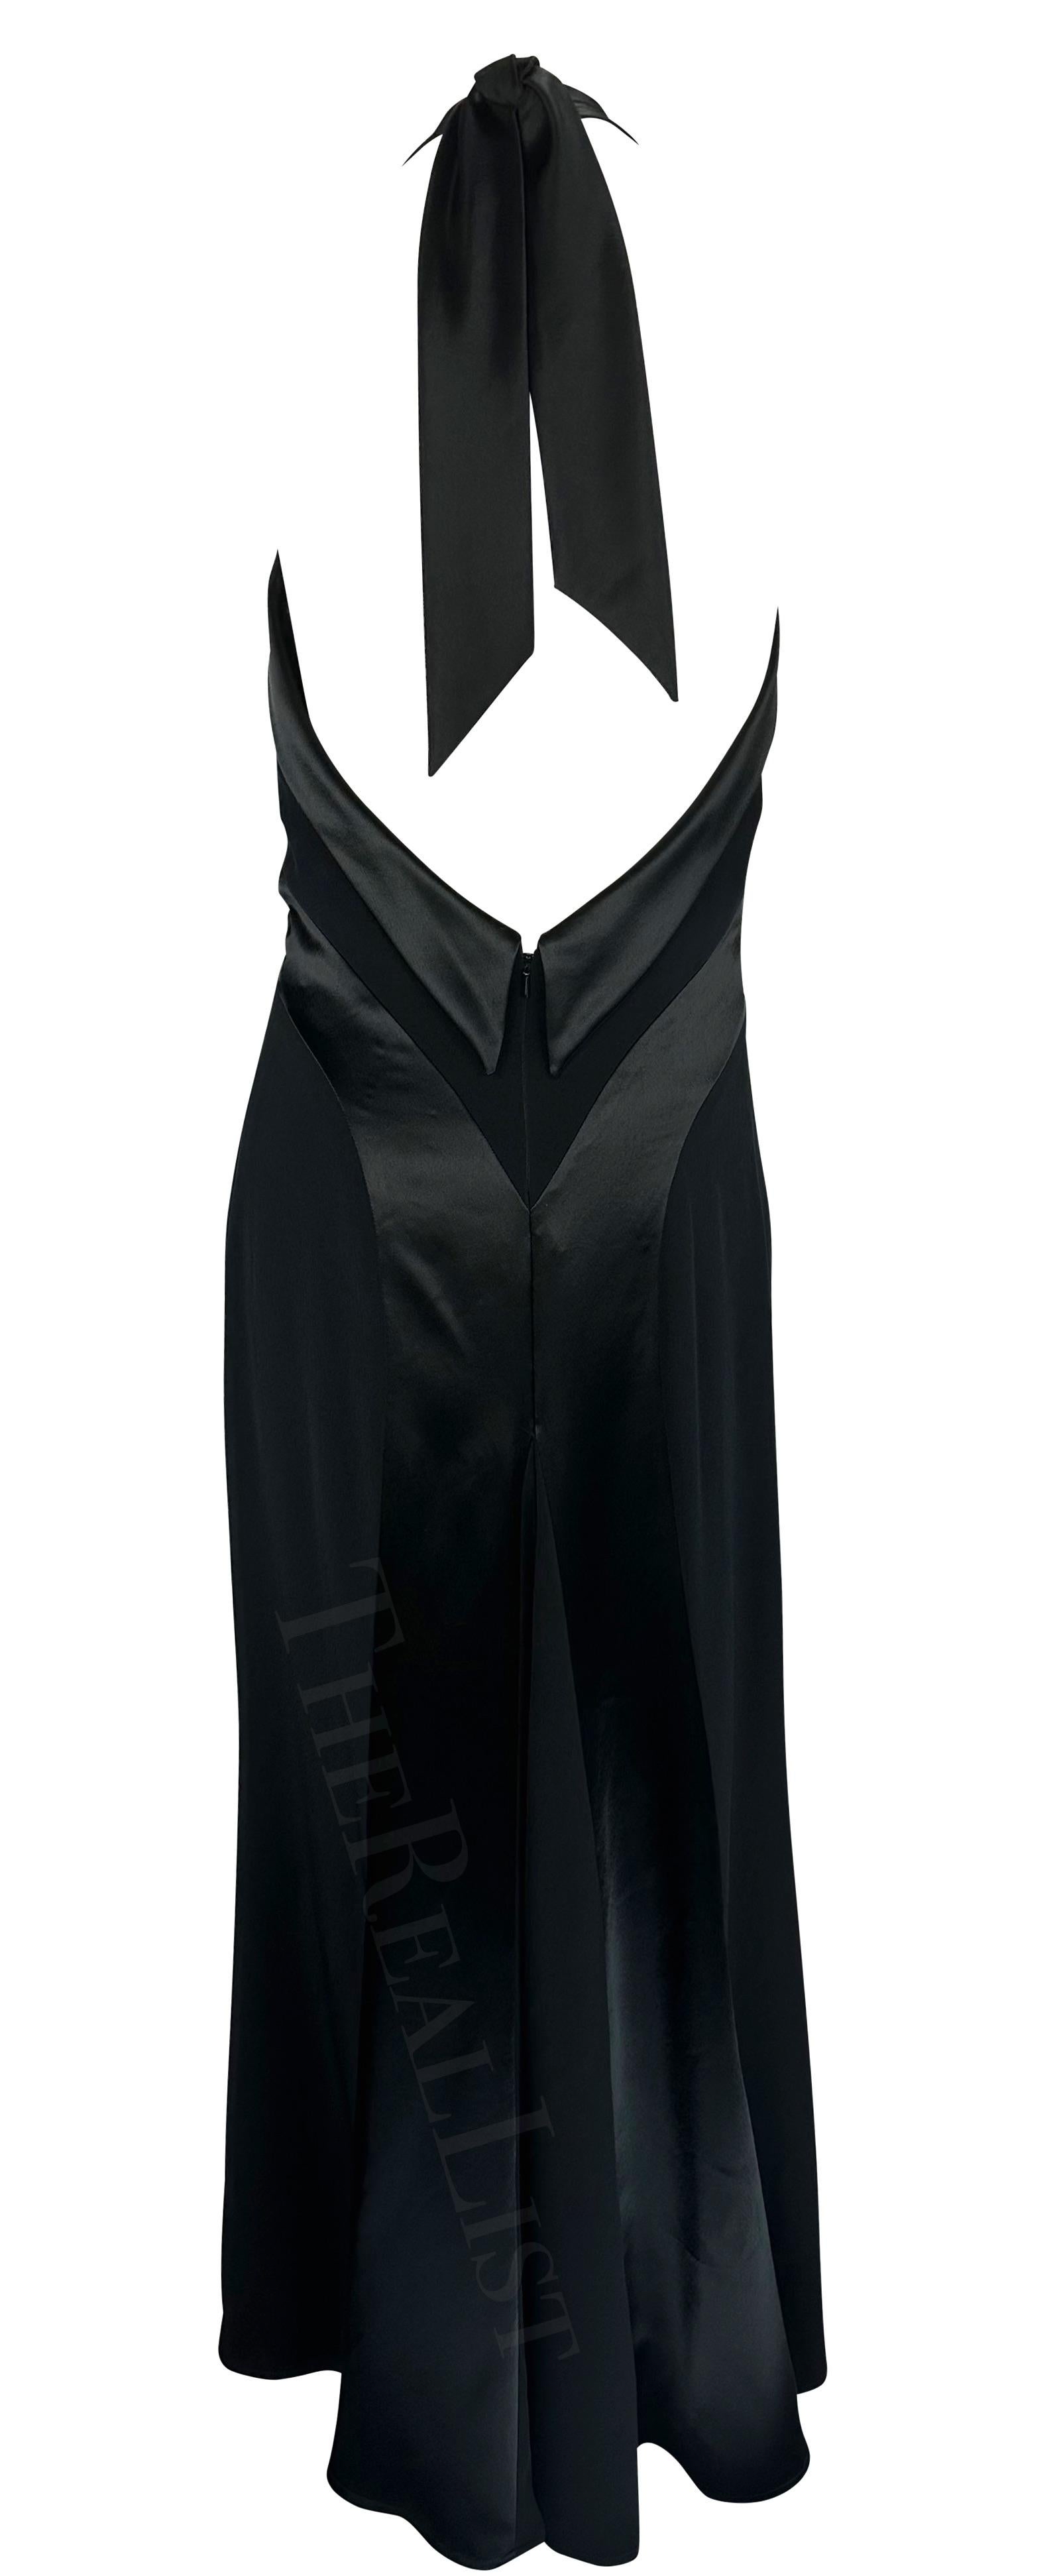 S/S 1997 Bob Mackie Runway Black Halterneck Satin Panel Backless Gown For Sale 3